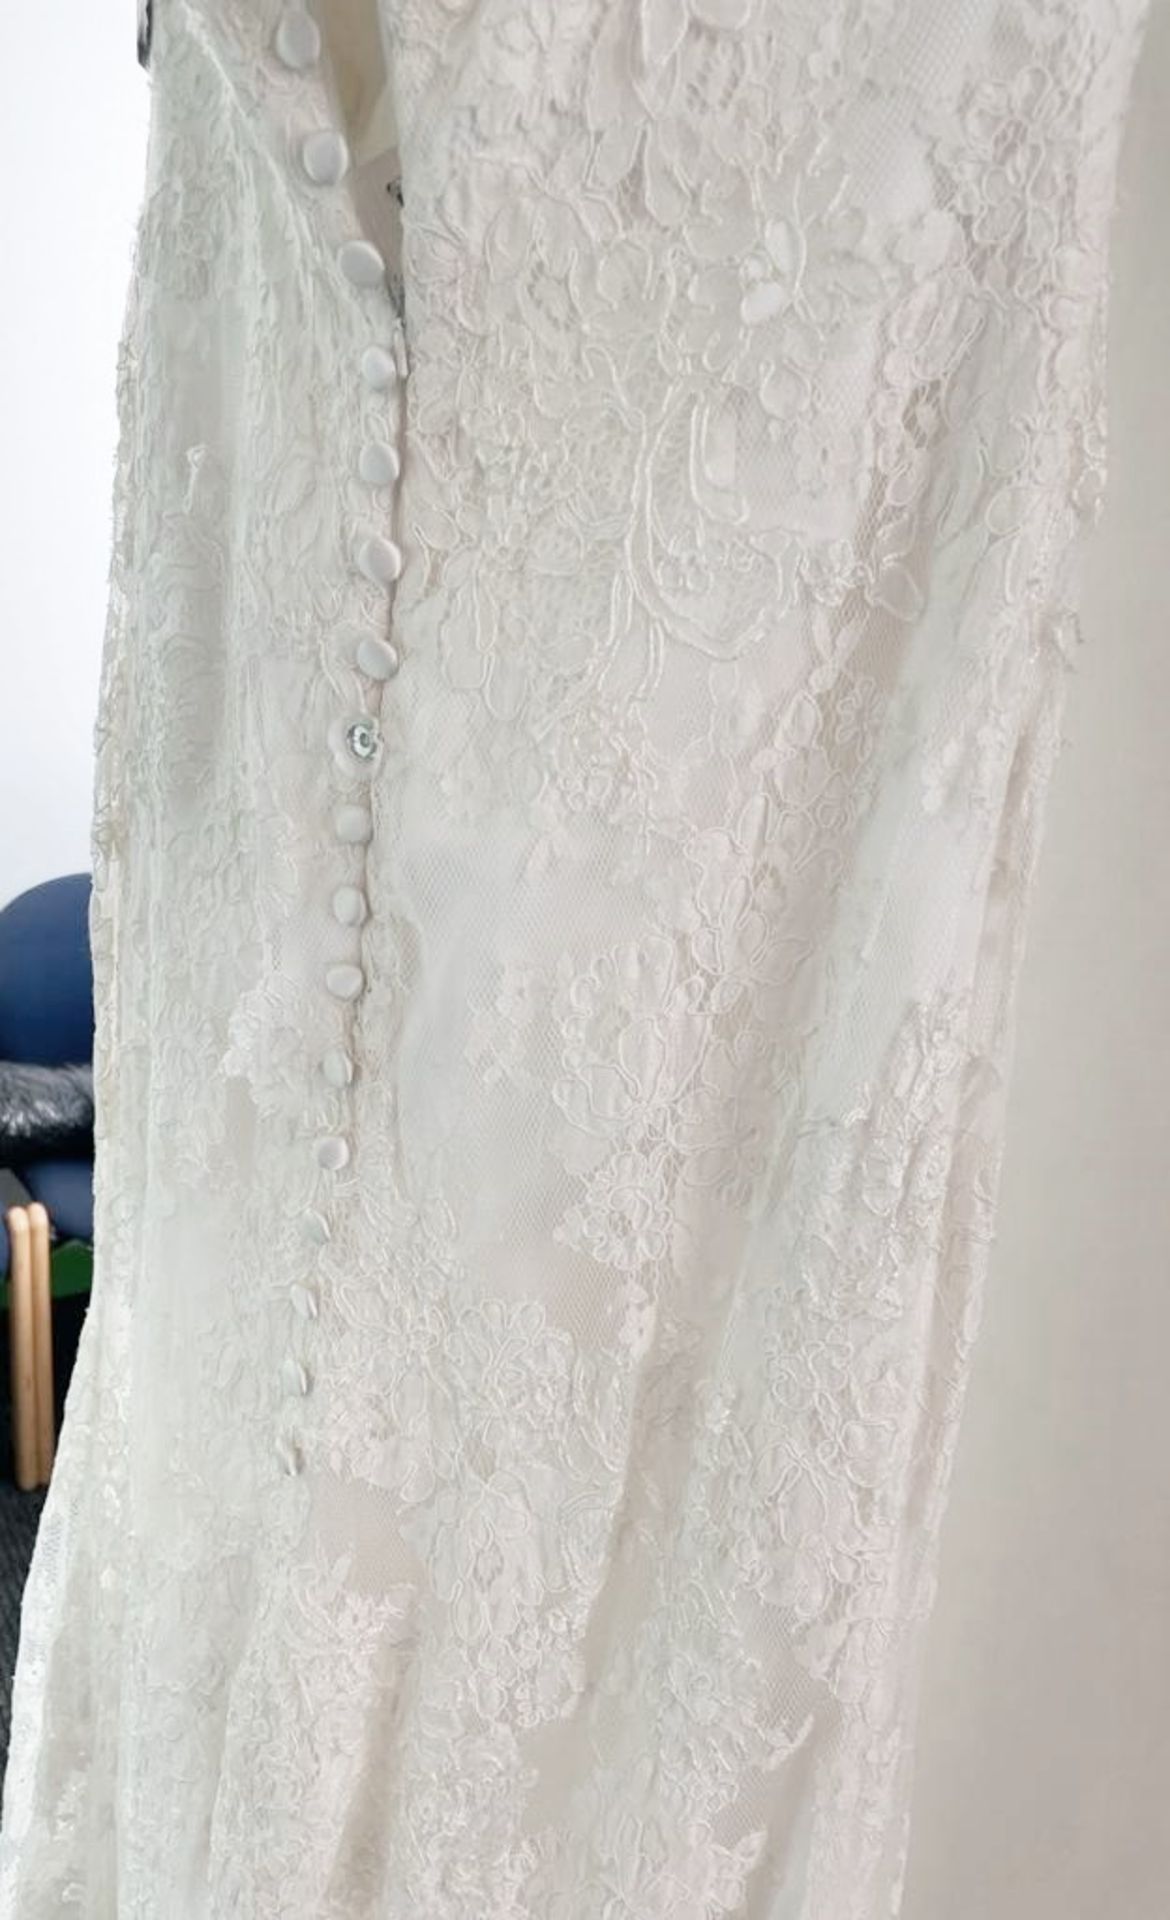 1 x ANNASUL Y 'Zelma' Designer Wedding Dress Bridal Gown - Size: UK 12 - Original RRP £1,750 - Image 8 of 11